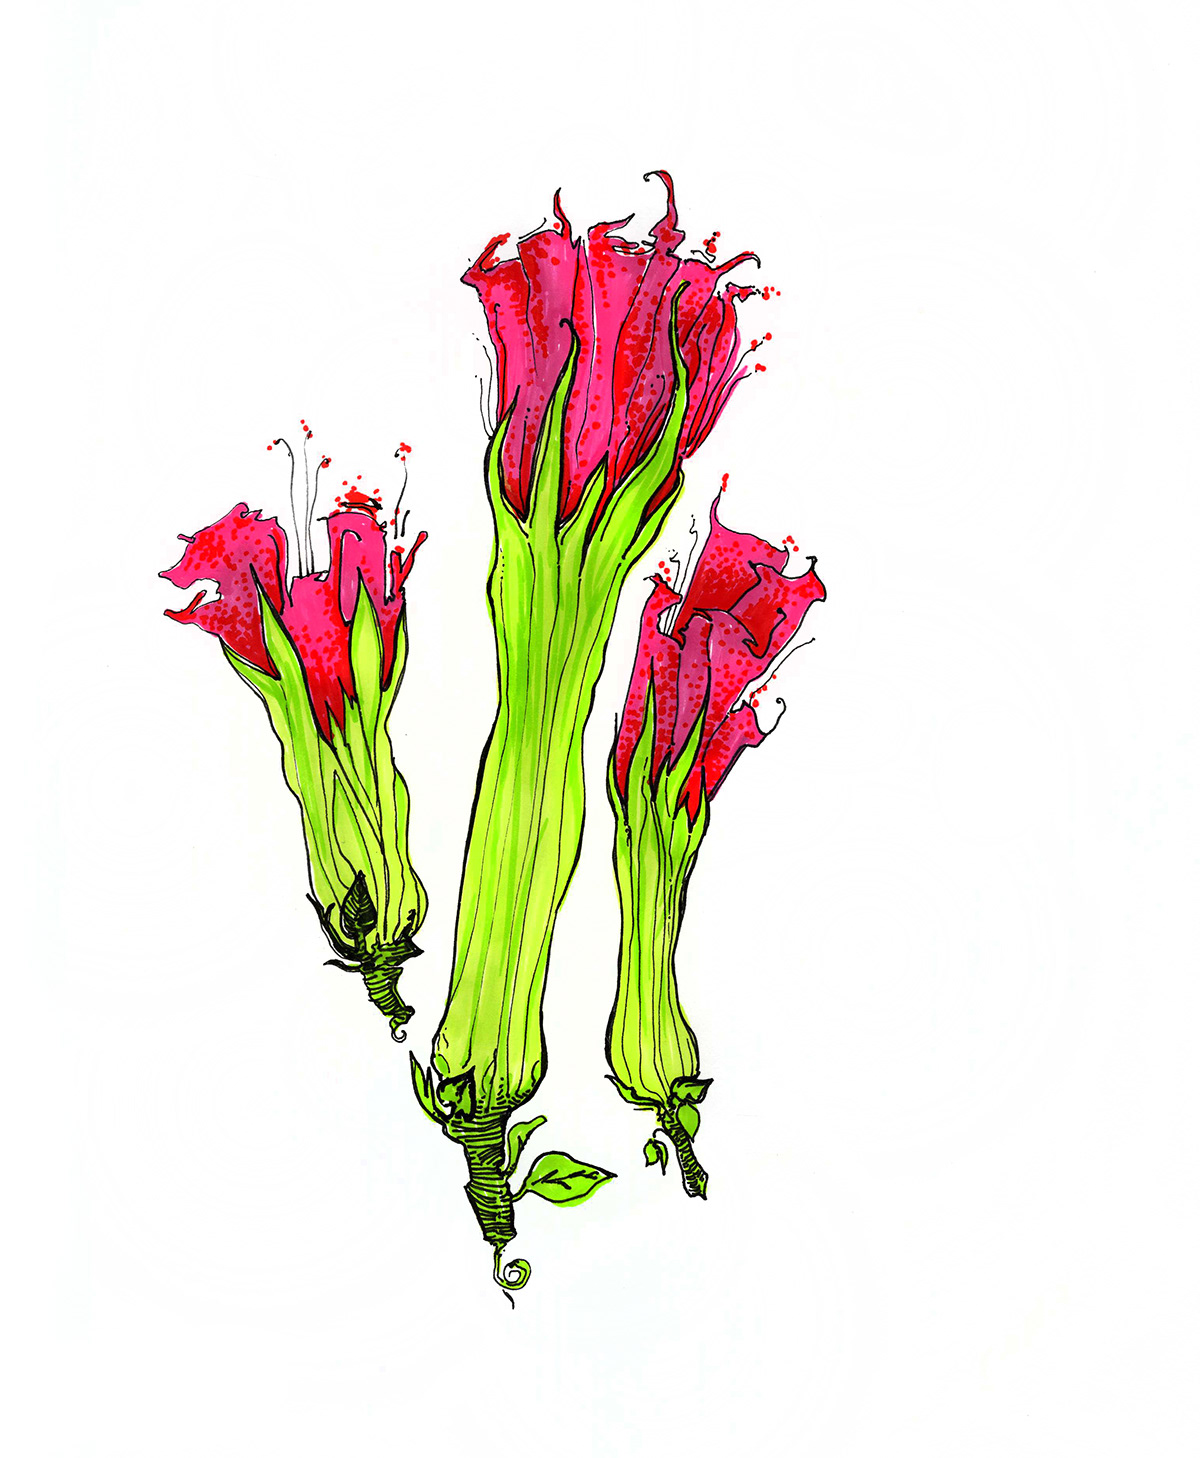 Flowers drawings sketchbook Textiles florals repeats realistic